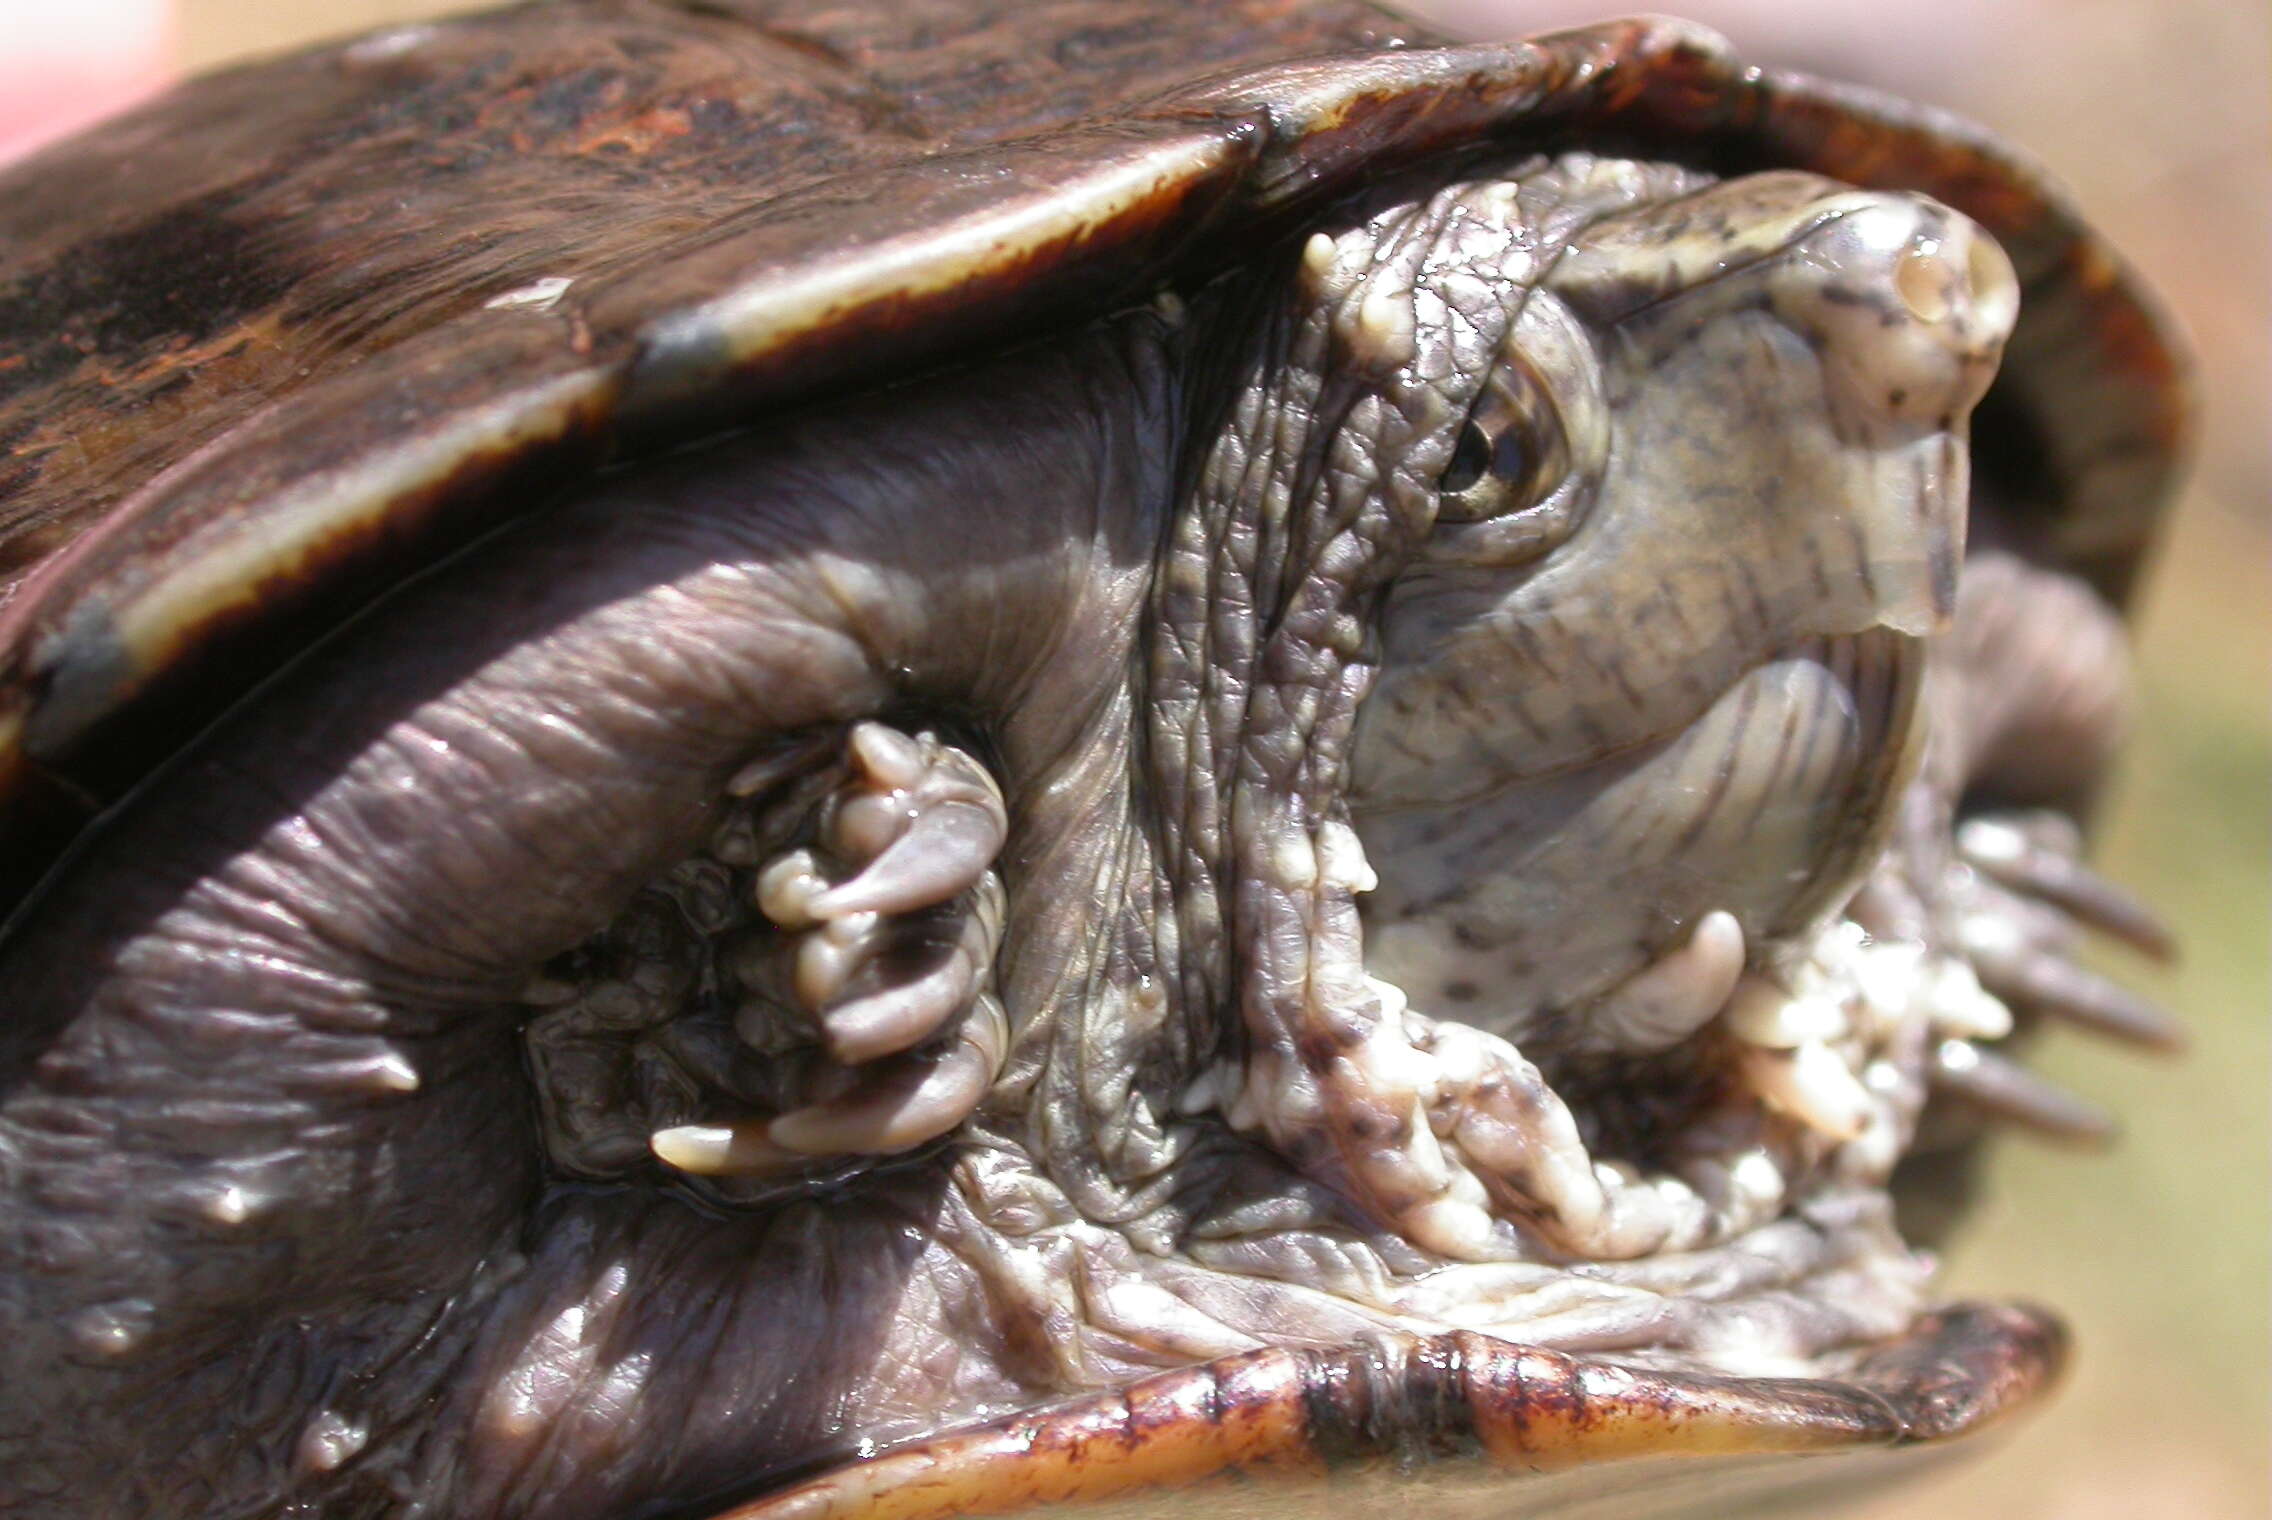 Image of mud turtles